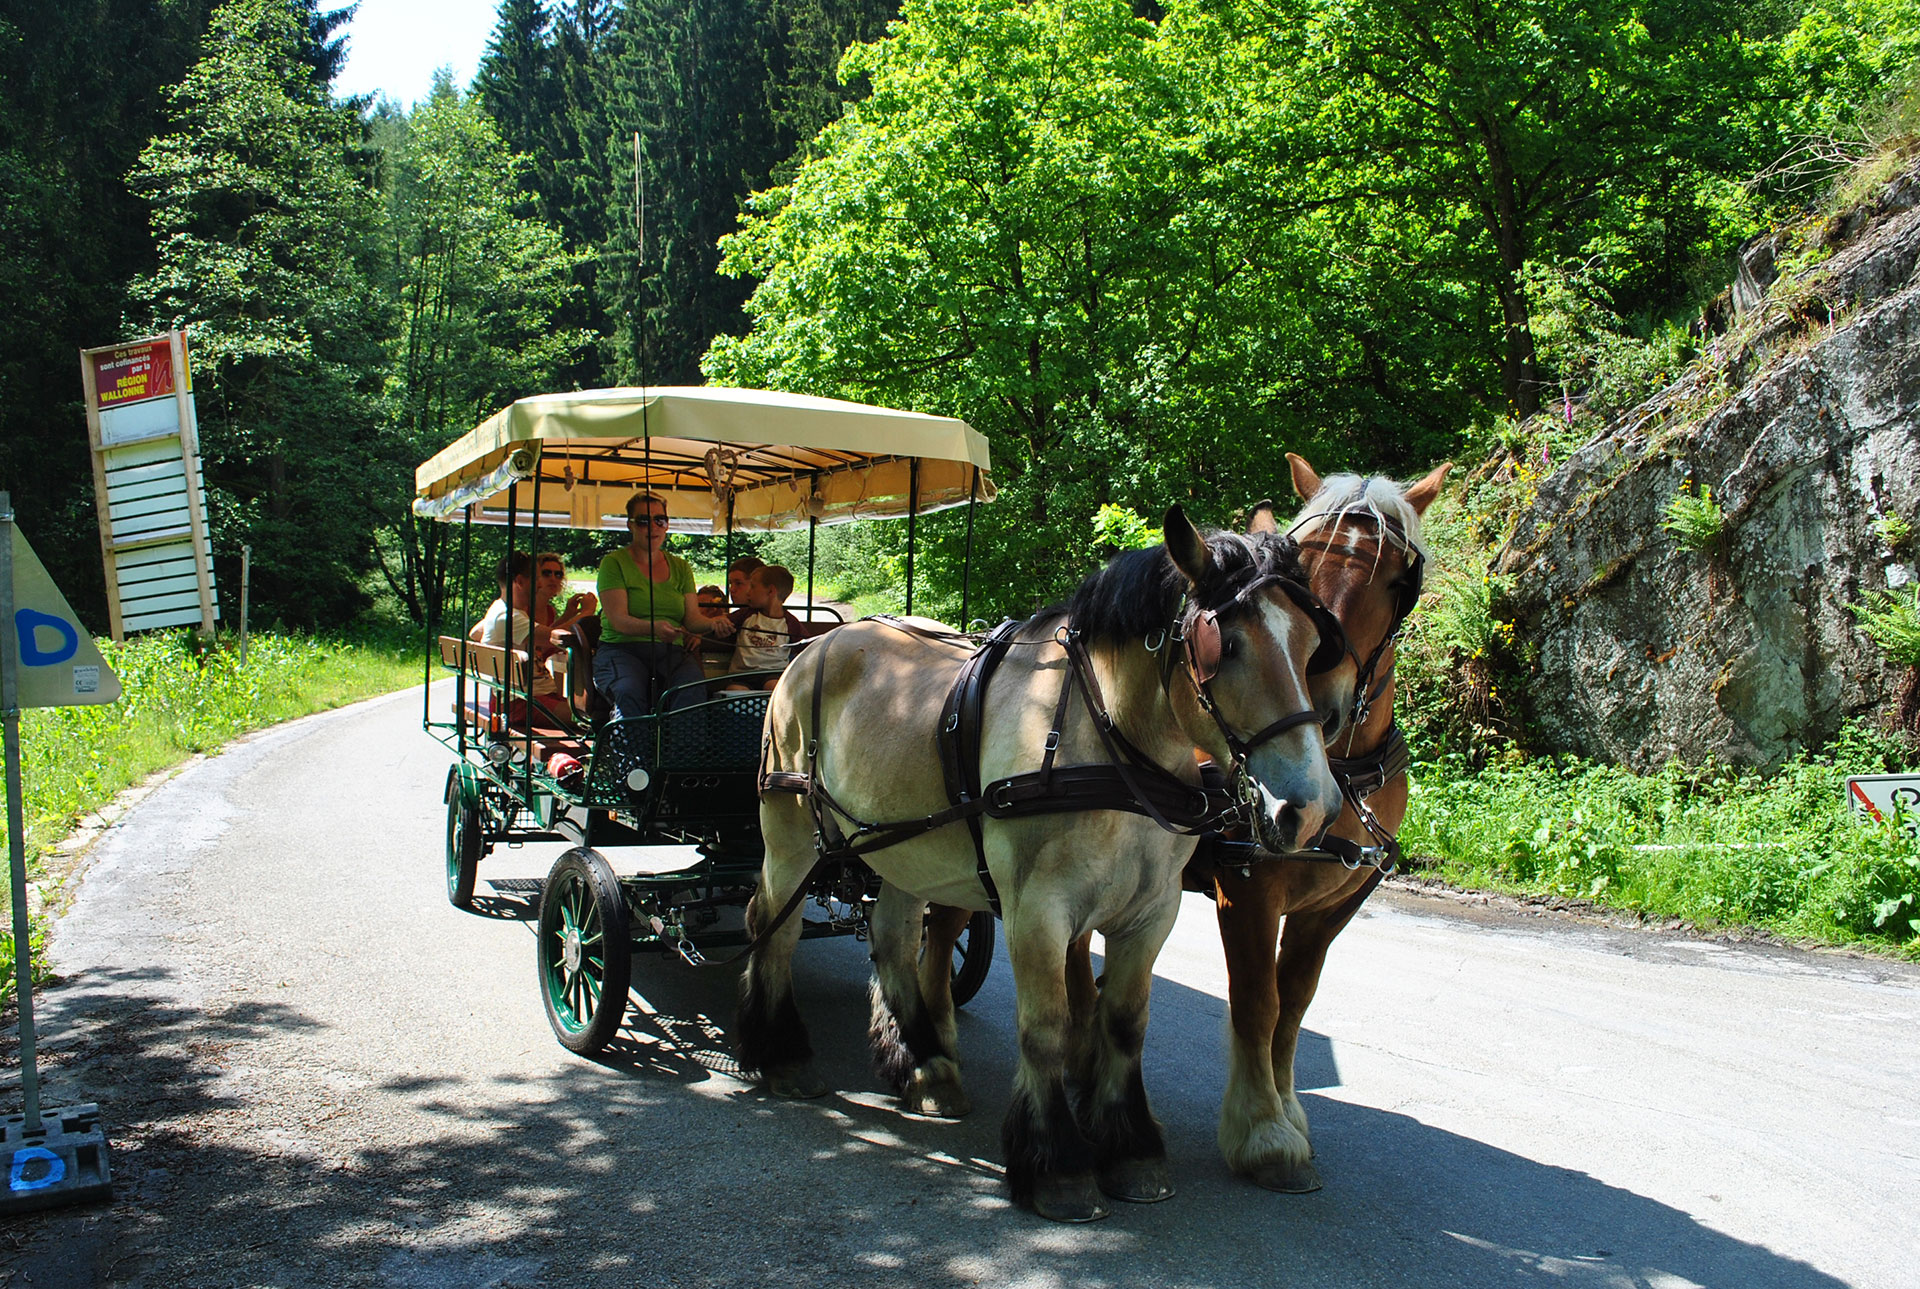 A family enjoys an Ardenne draft horse drawn carriage